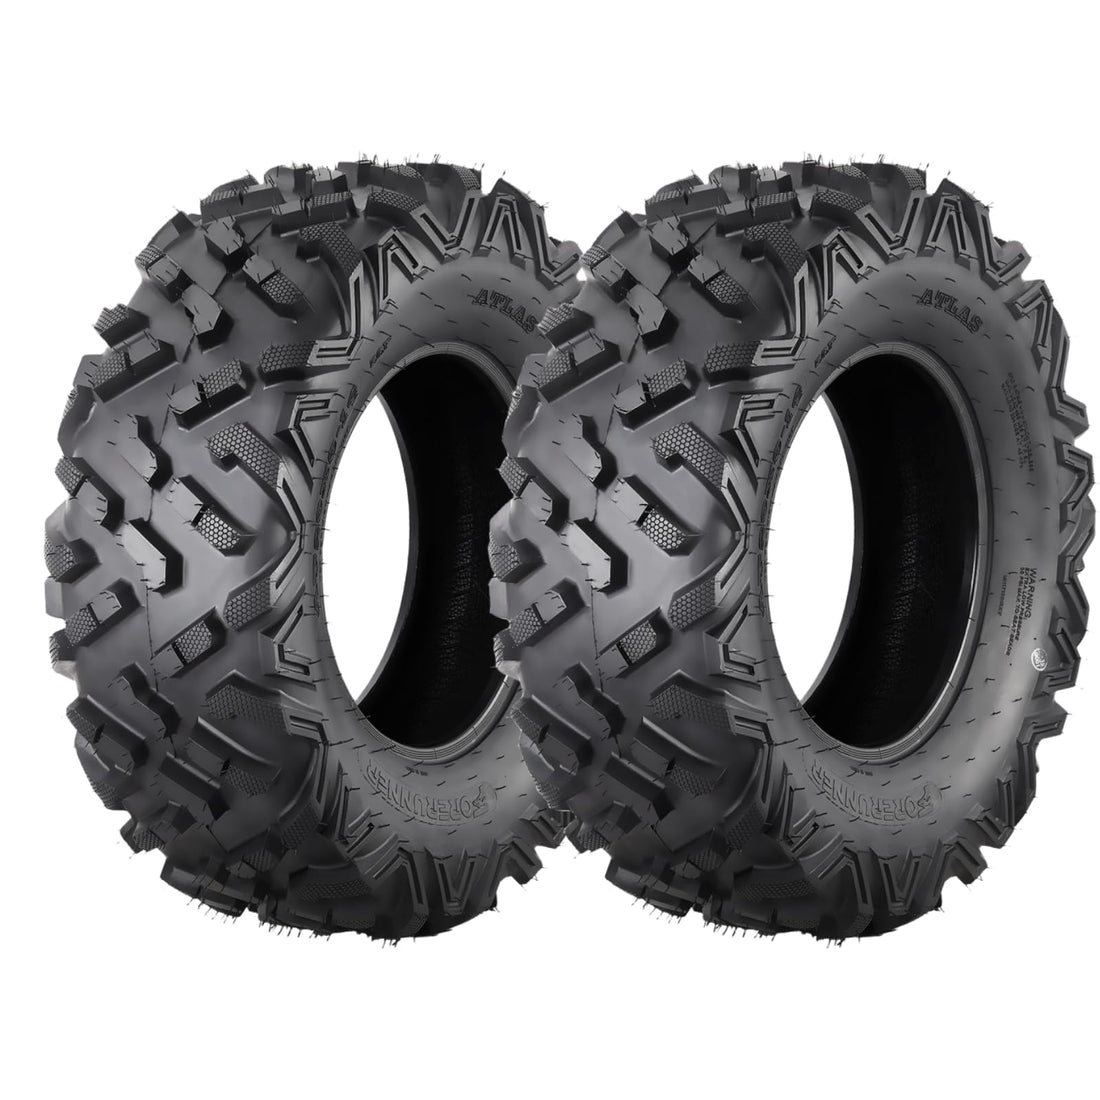 29x9-14 ATV Tires UTV Trail Sand Off-Road Tires 29x9-14, All Terrain Tires 20mm Tread Depth 29x9x14 UTV Tires, 6 PR, Tubeless Set of 2